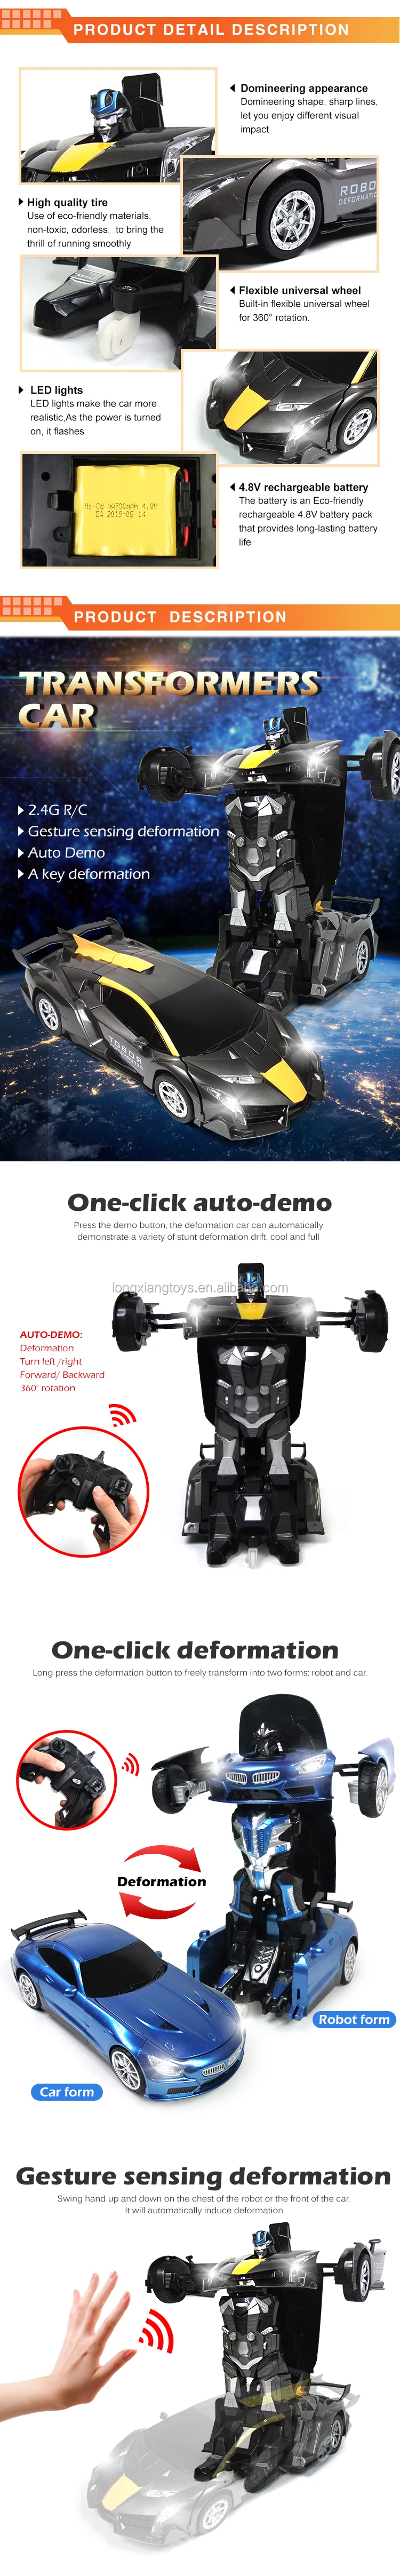 Deformation Robot 2 in 1 RC Robot Transform Model Car Toys